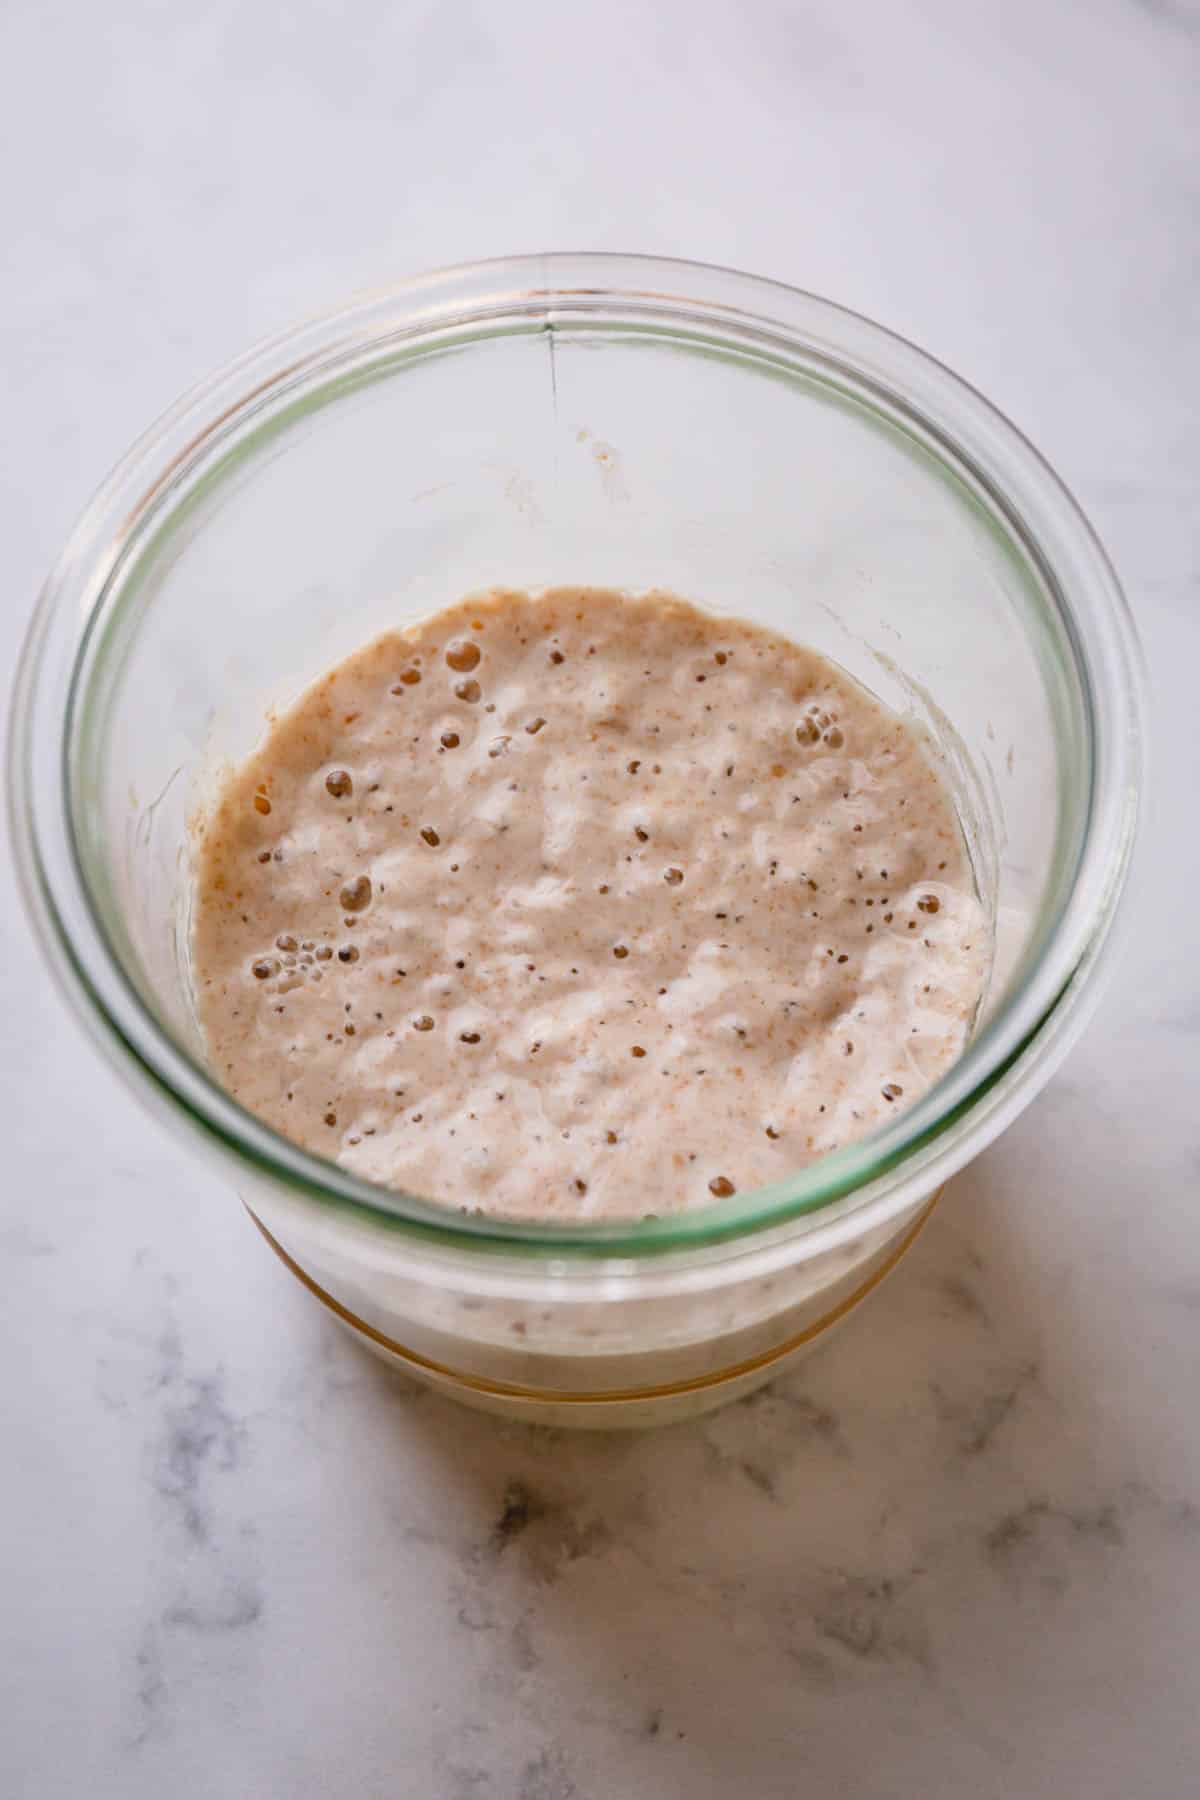 Active sourdough starter in a glass jar.